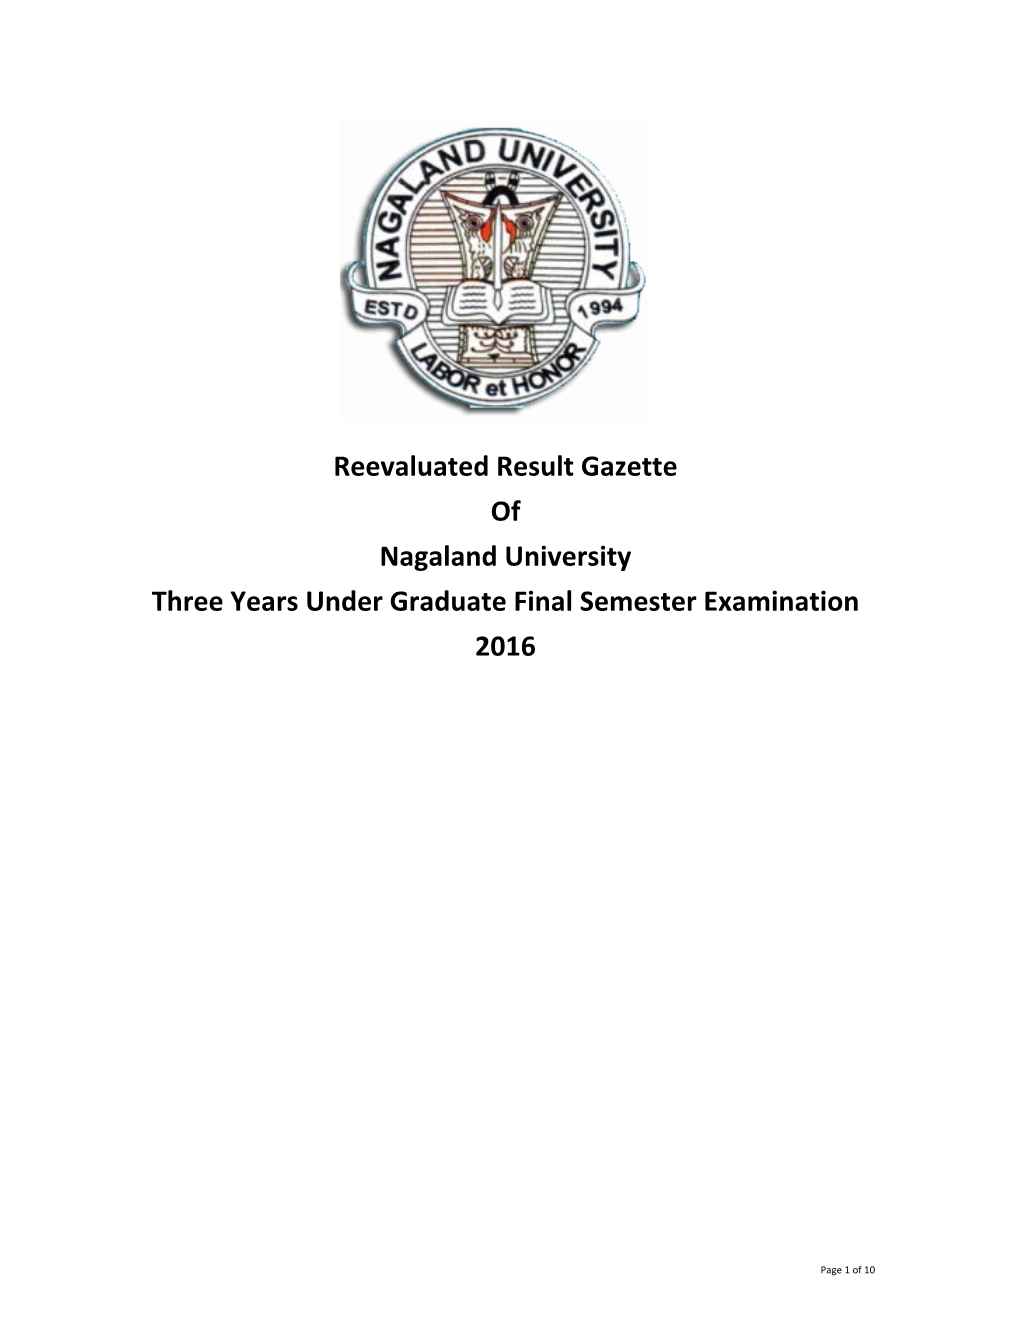 Reevaluated Result Gazette of Nagaland University Three Years Under Graduate Final Semester Examination 2016